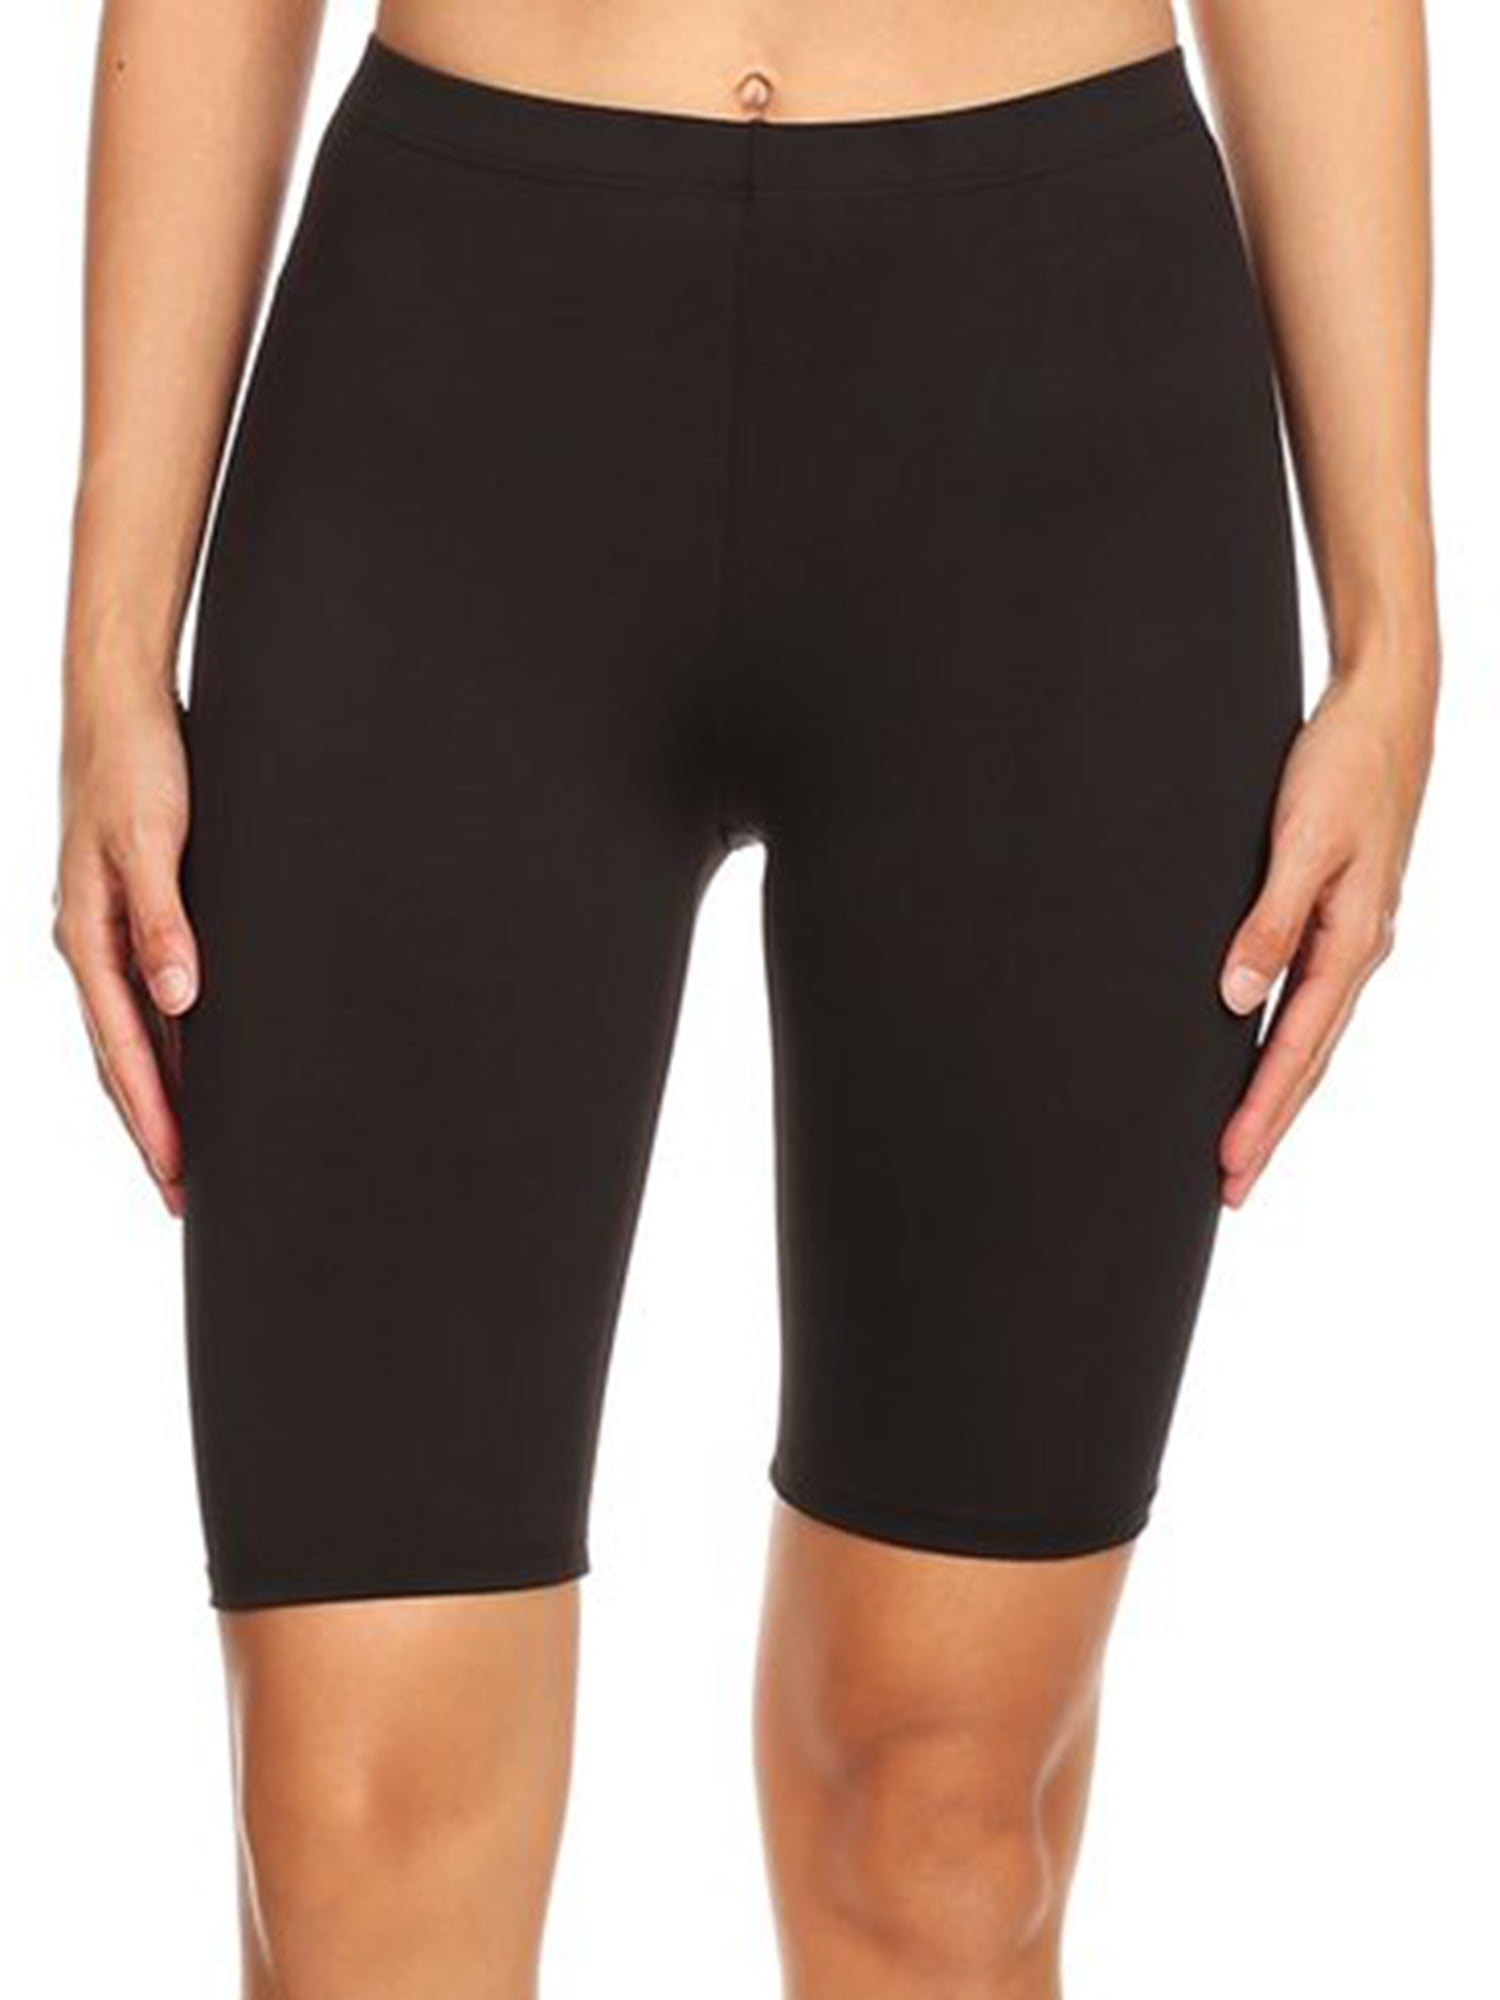 Imagenation Plain Soild Biker Shorts, Medium, Black - Walmart.com